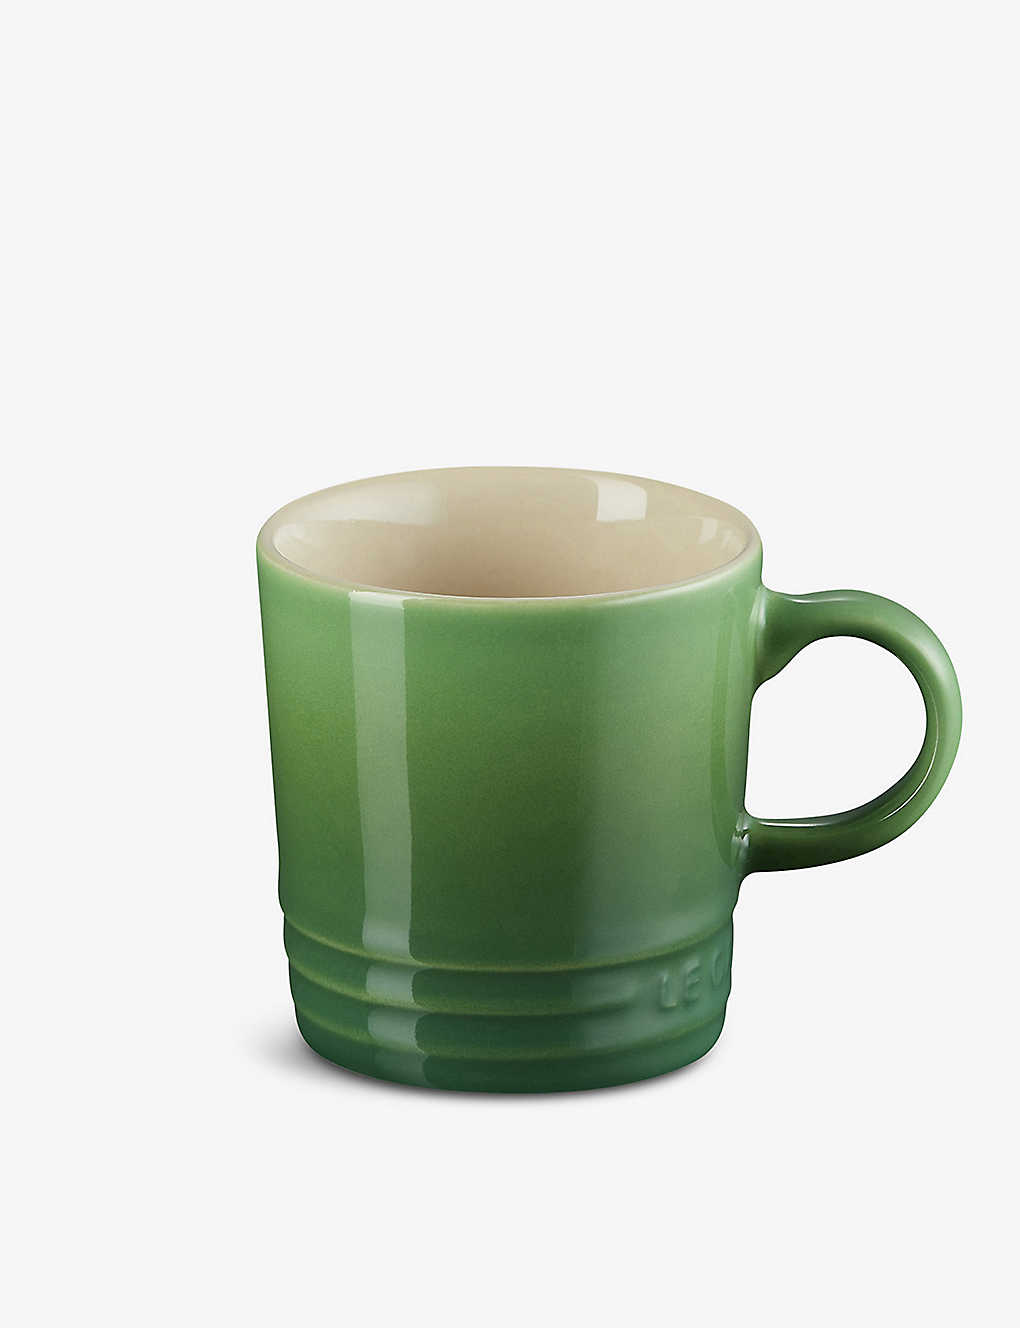 Le Creuset Bamboo Green Stoneware Espresso Mug 100ml